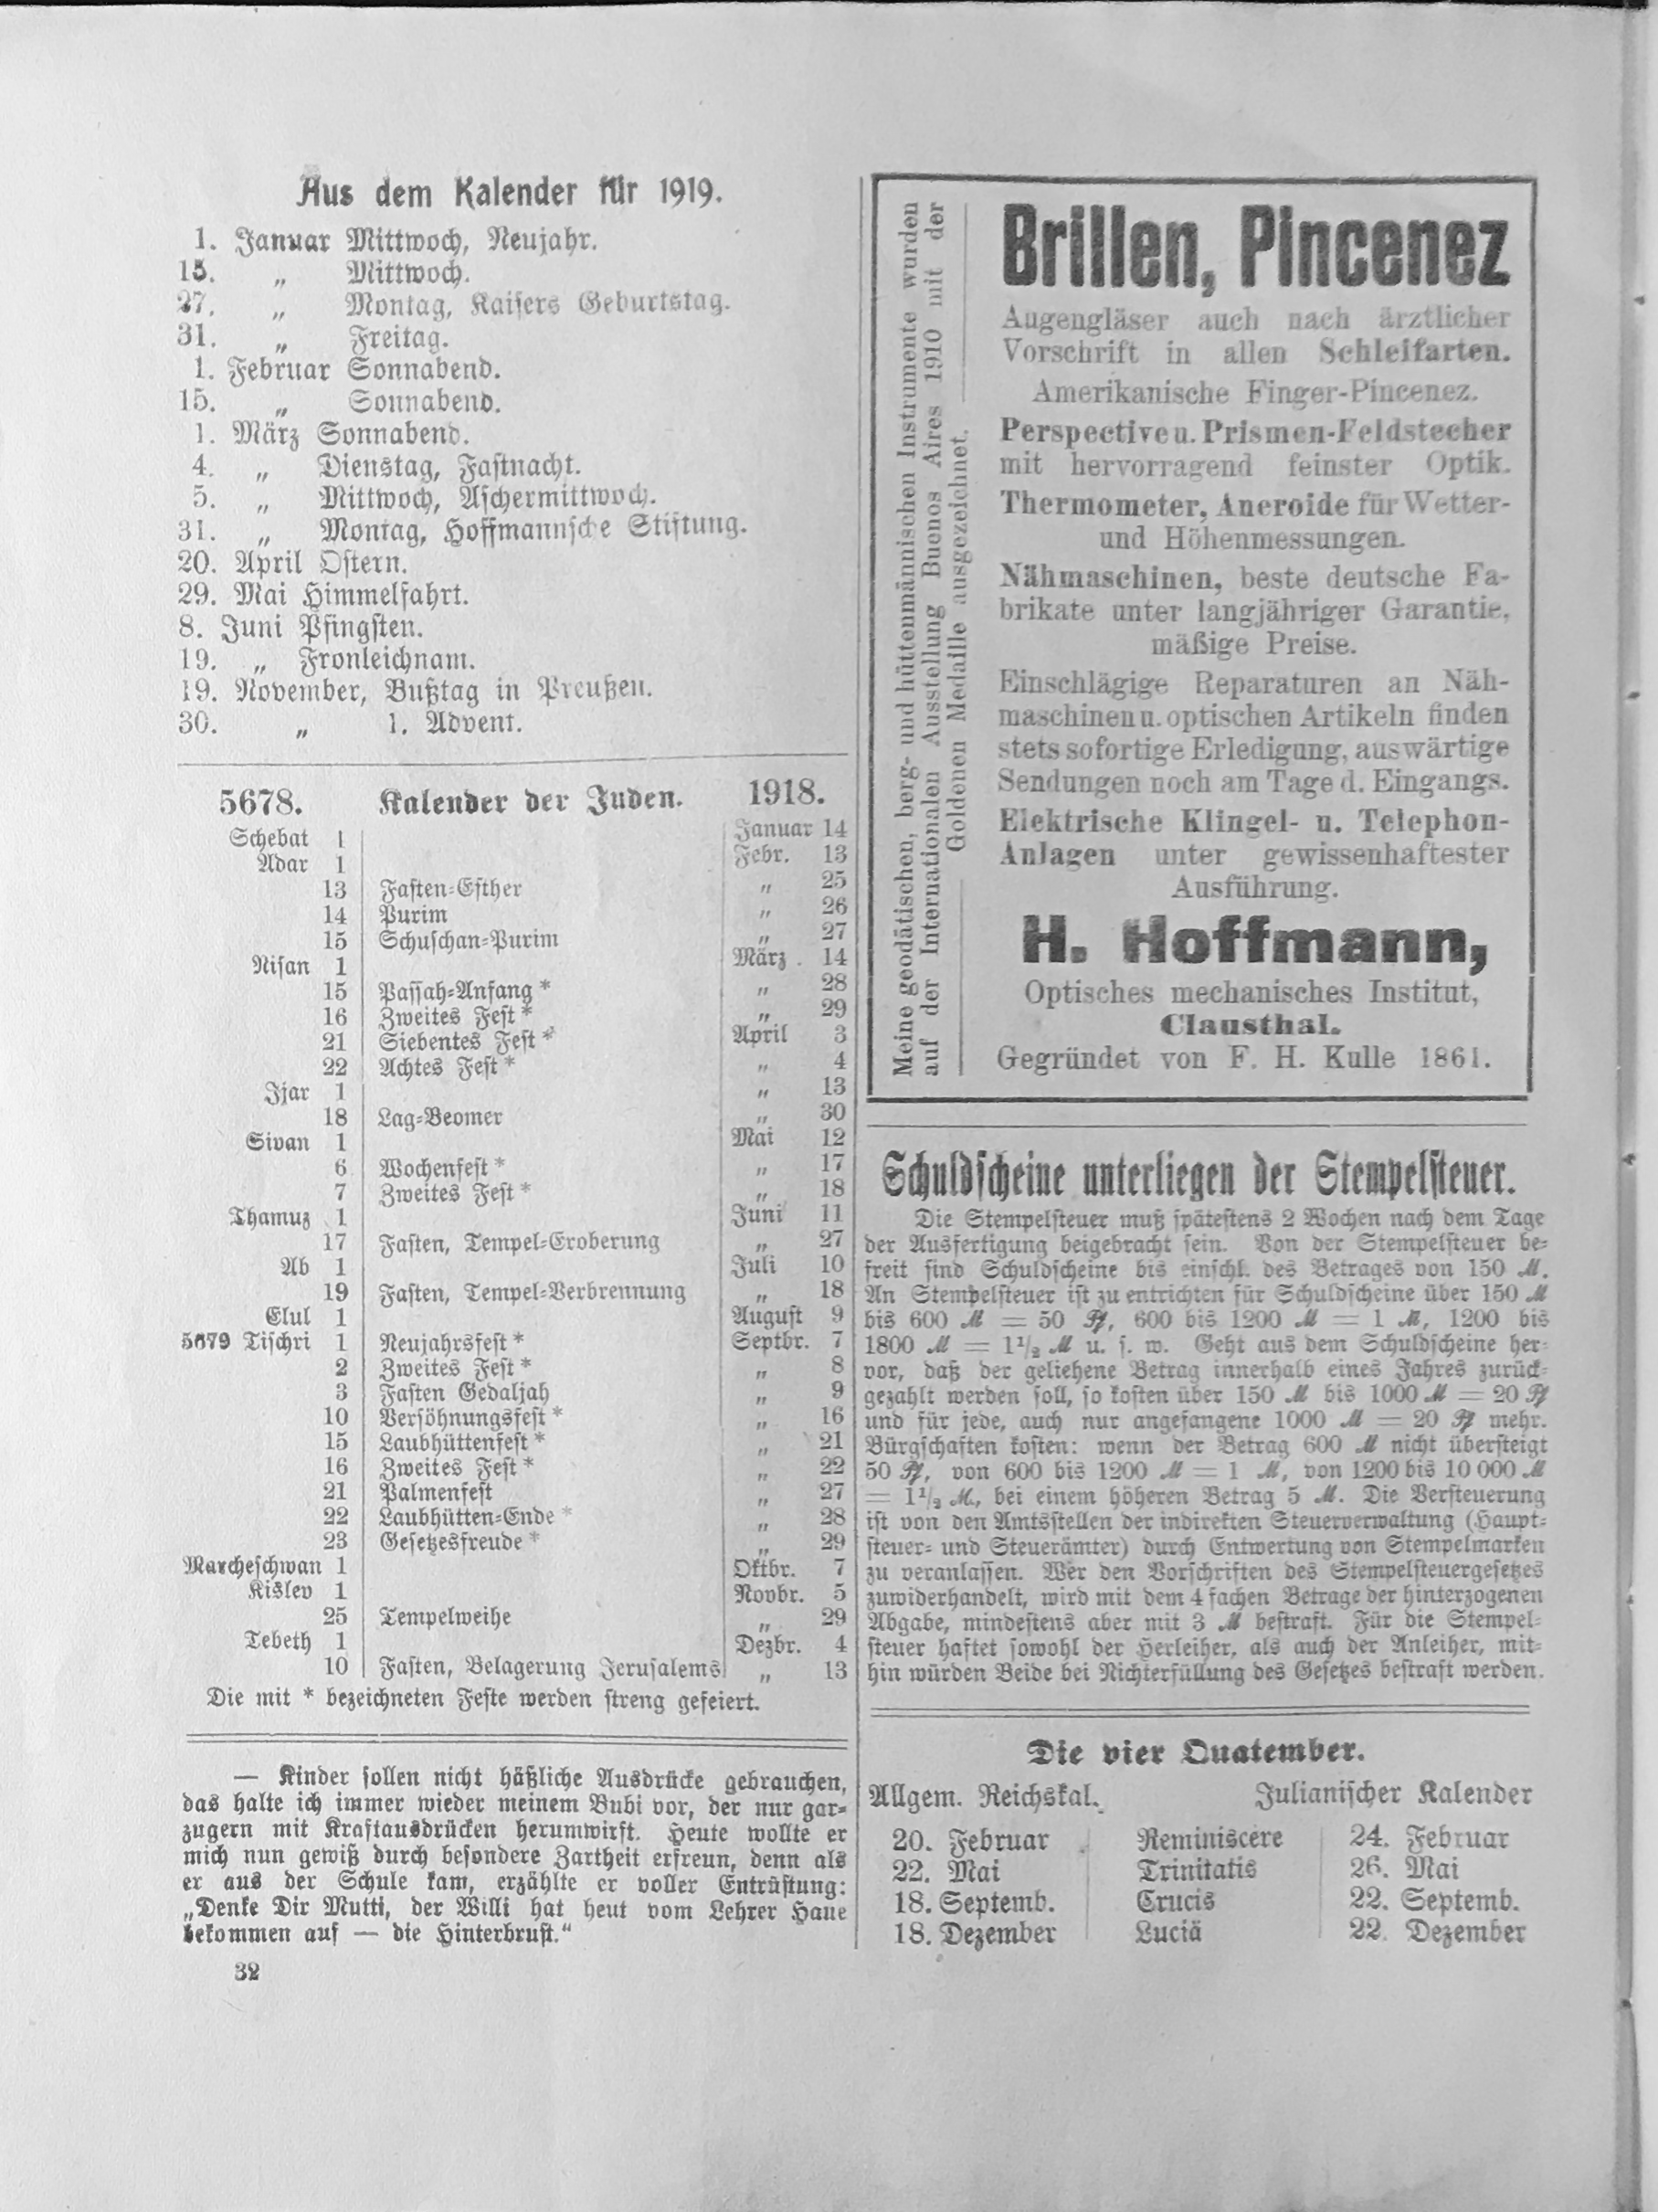 File:Harz-Berg-Kalender 1918 033.png - Wikimedia Commons